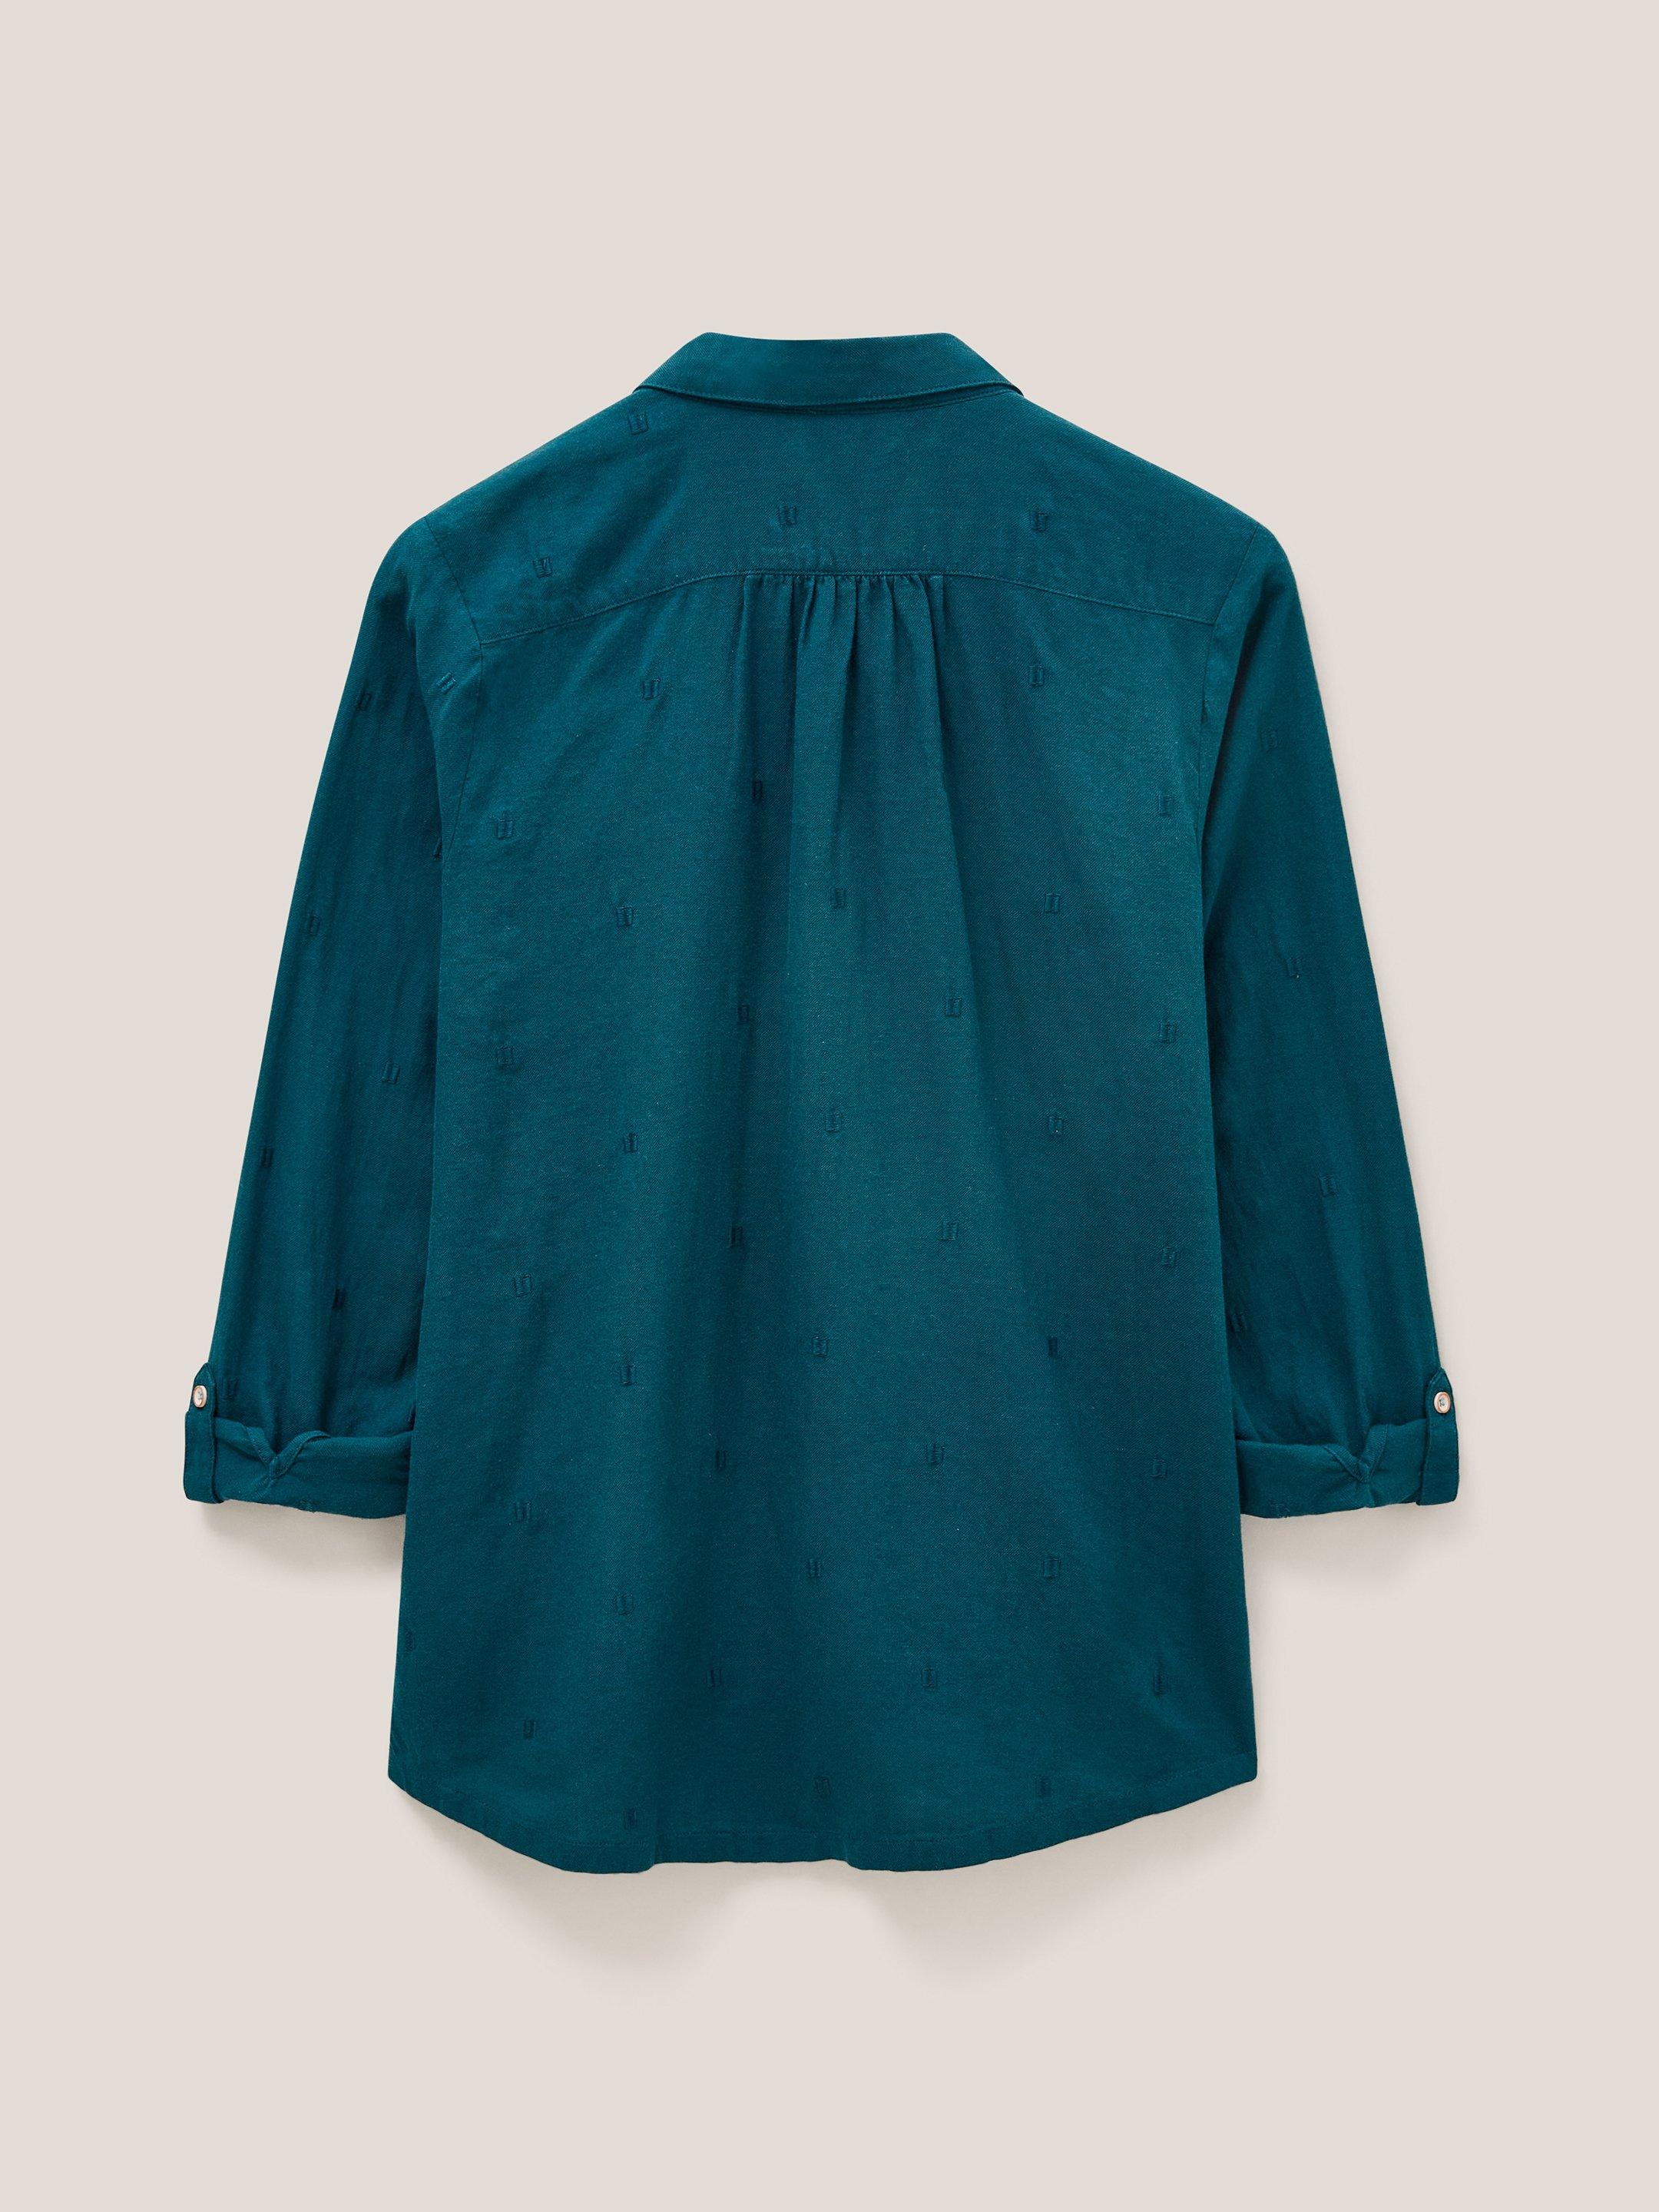 Sophie Organic Cotton Shirt in DK TEAL - FLAT BACK